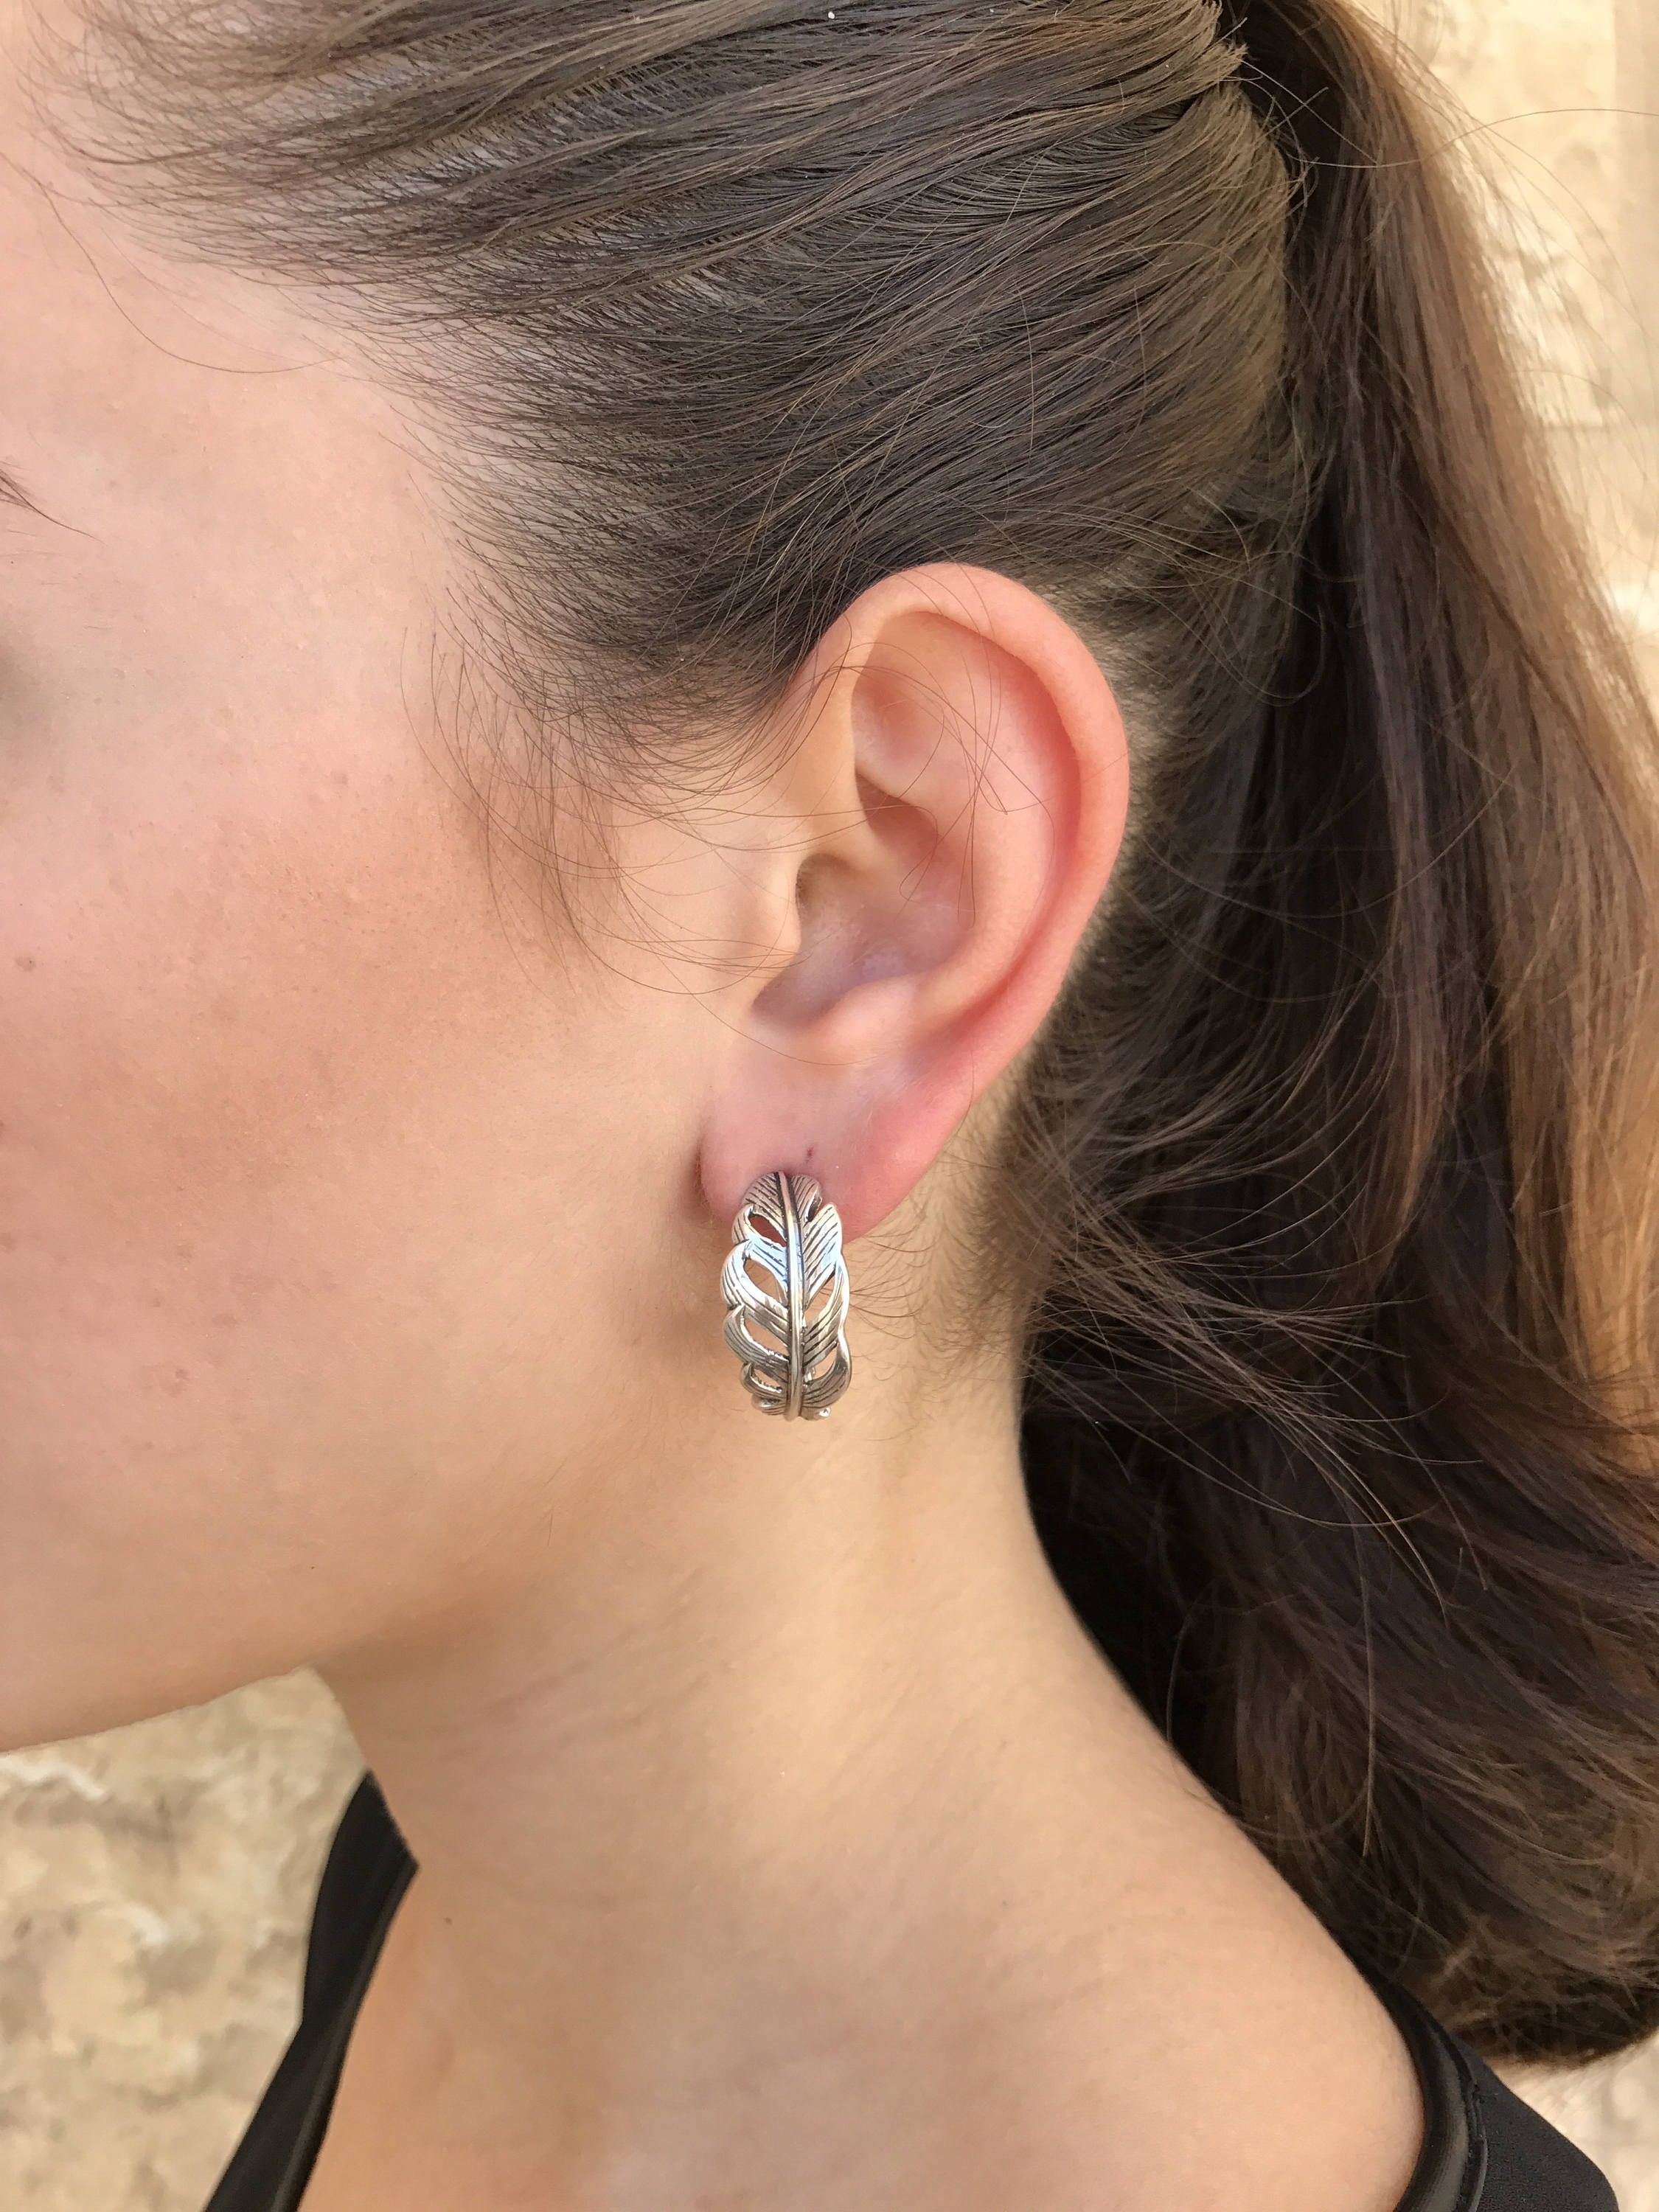 Leaf Earrings, Silver Leaf Earrings, Solid Silver Earrings, Statement Earrings, Unique Art Earrings, Artistic Earrings, Sterling Silver